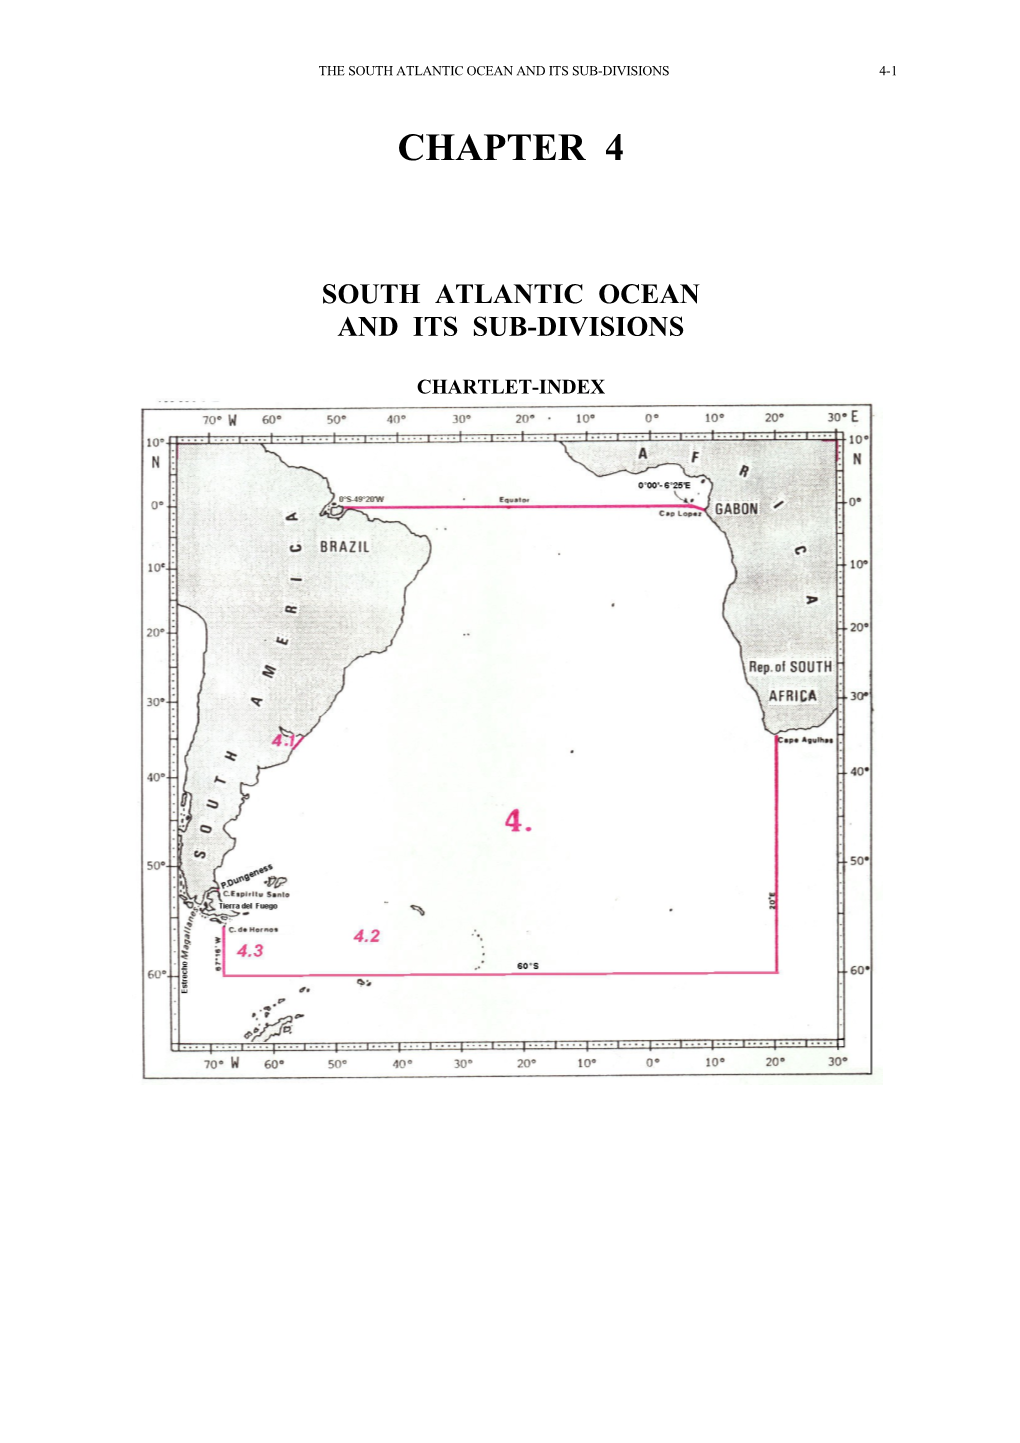 CHAPTER 4 - South Atlantic Ocean